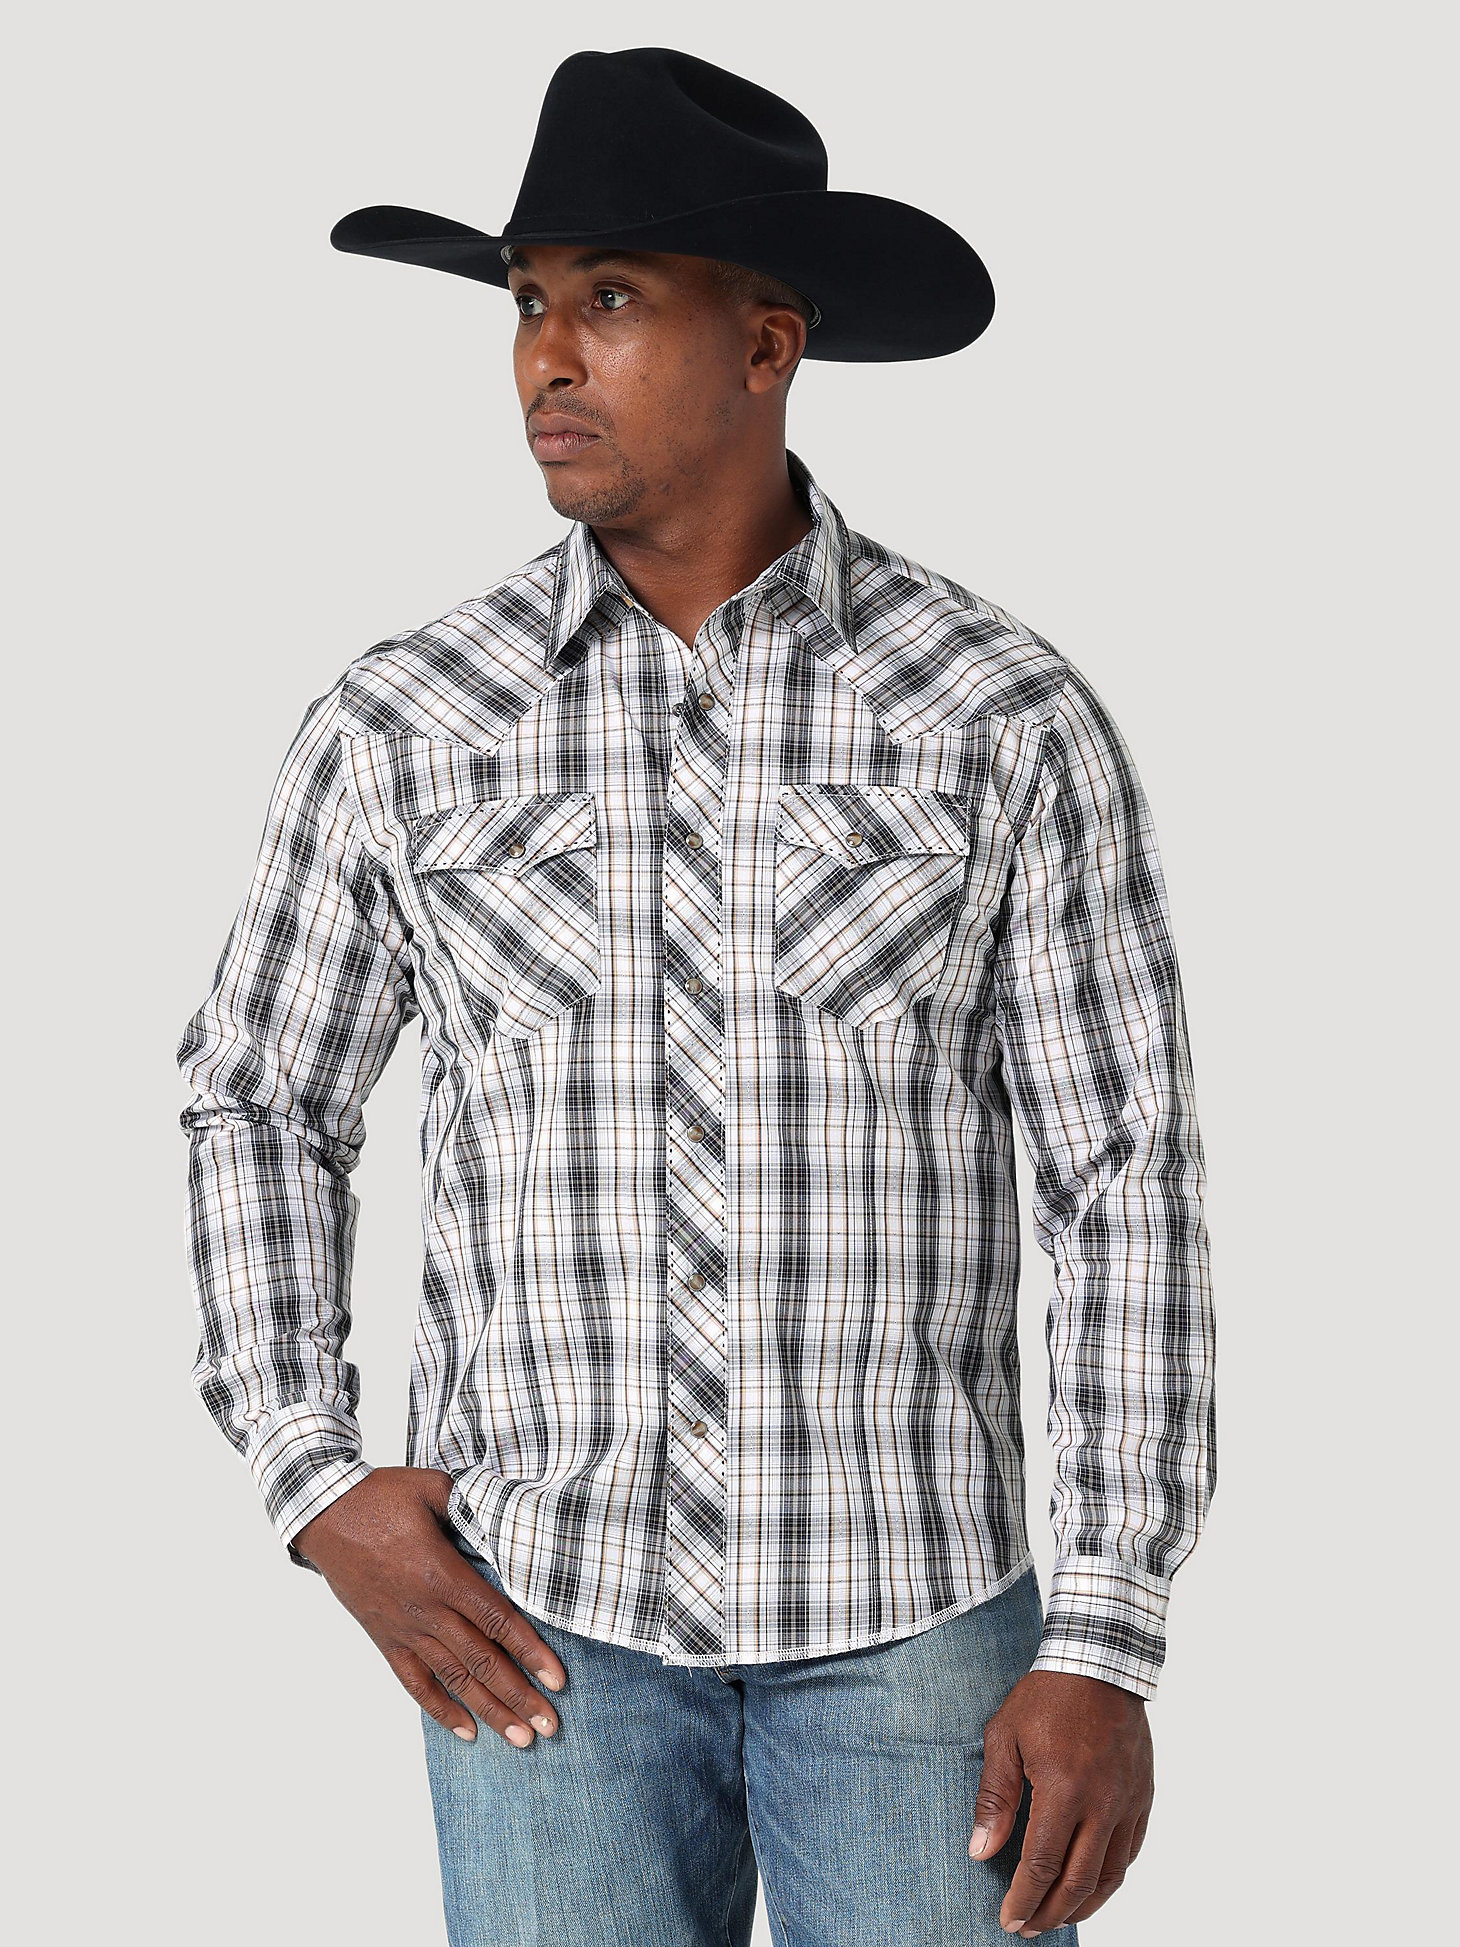 Rodeo Clothing Men's Premium Western Cowboy Pearl Snap Long Sleeve Plaid Shirt 